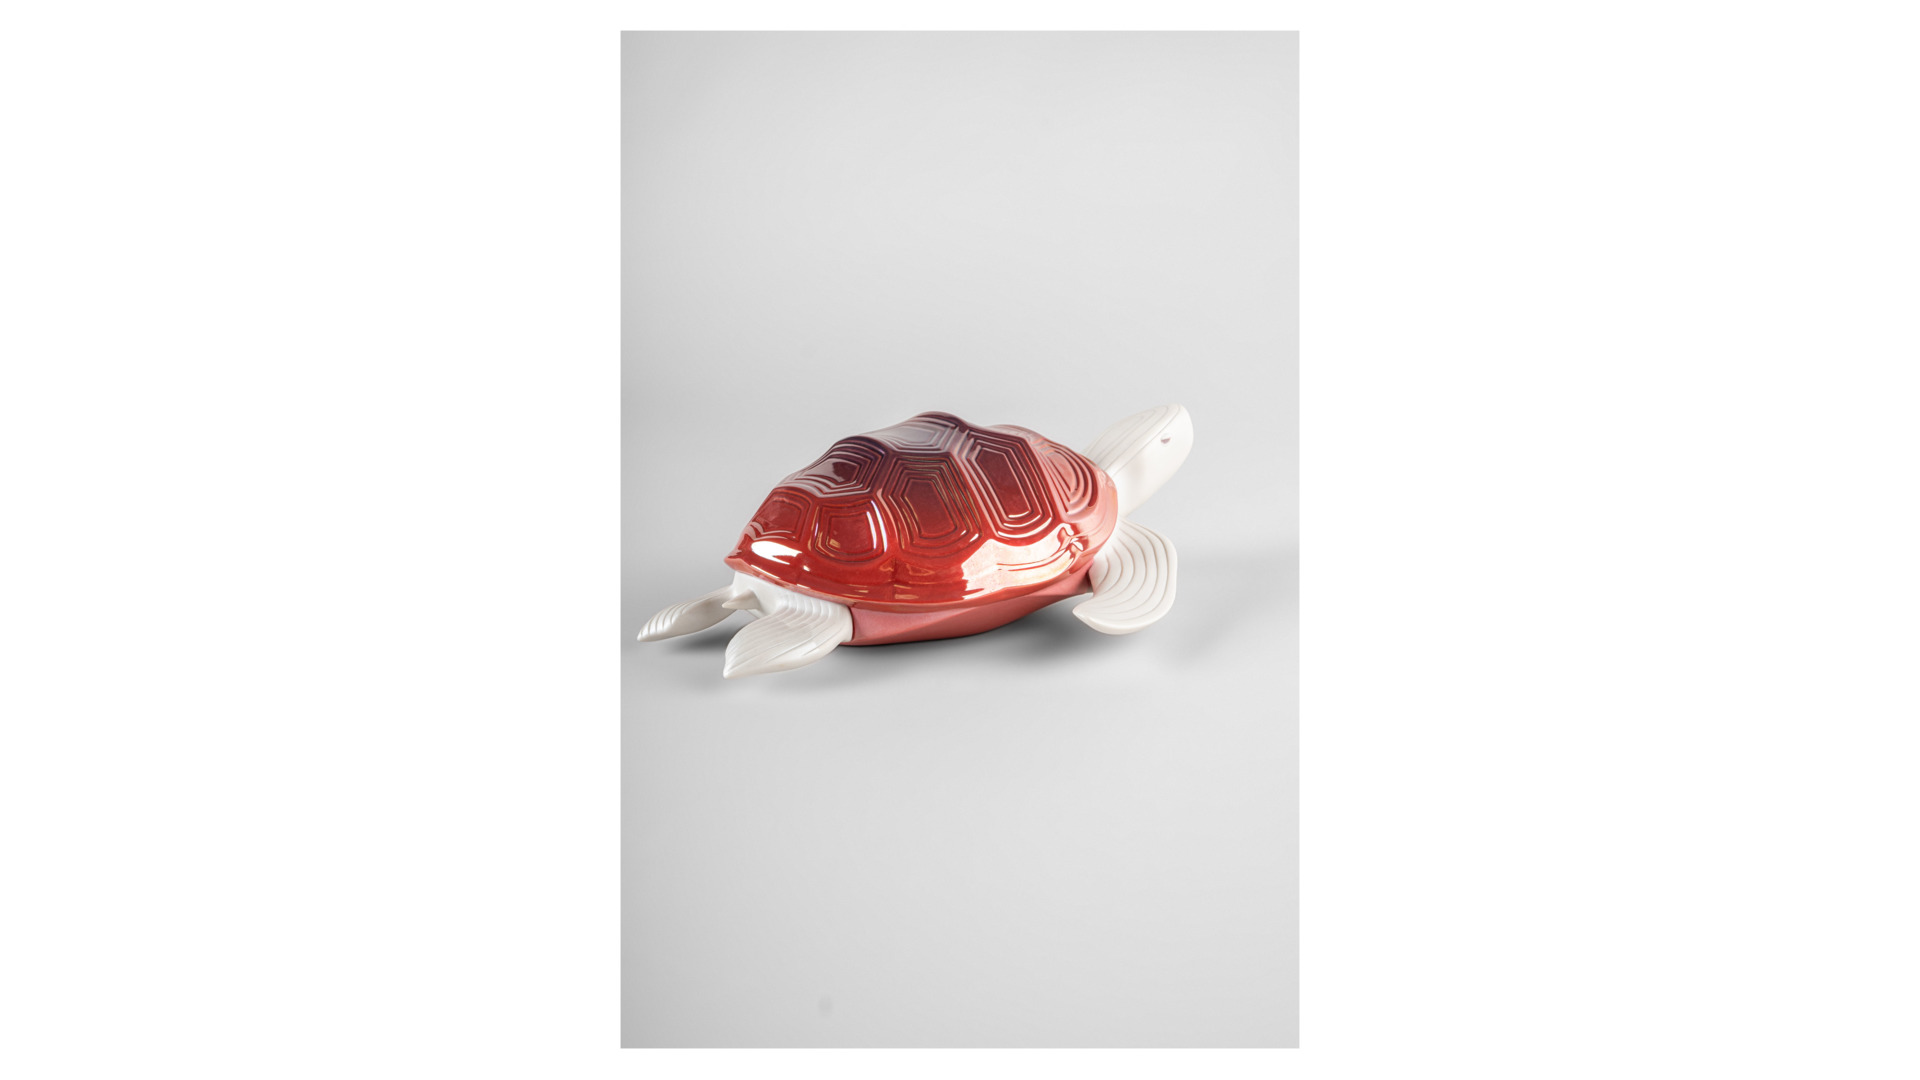 Фигурка Lladro Черепаха 27х26х8 см, фарфор